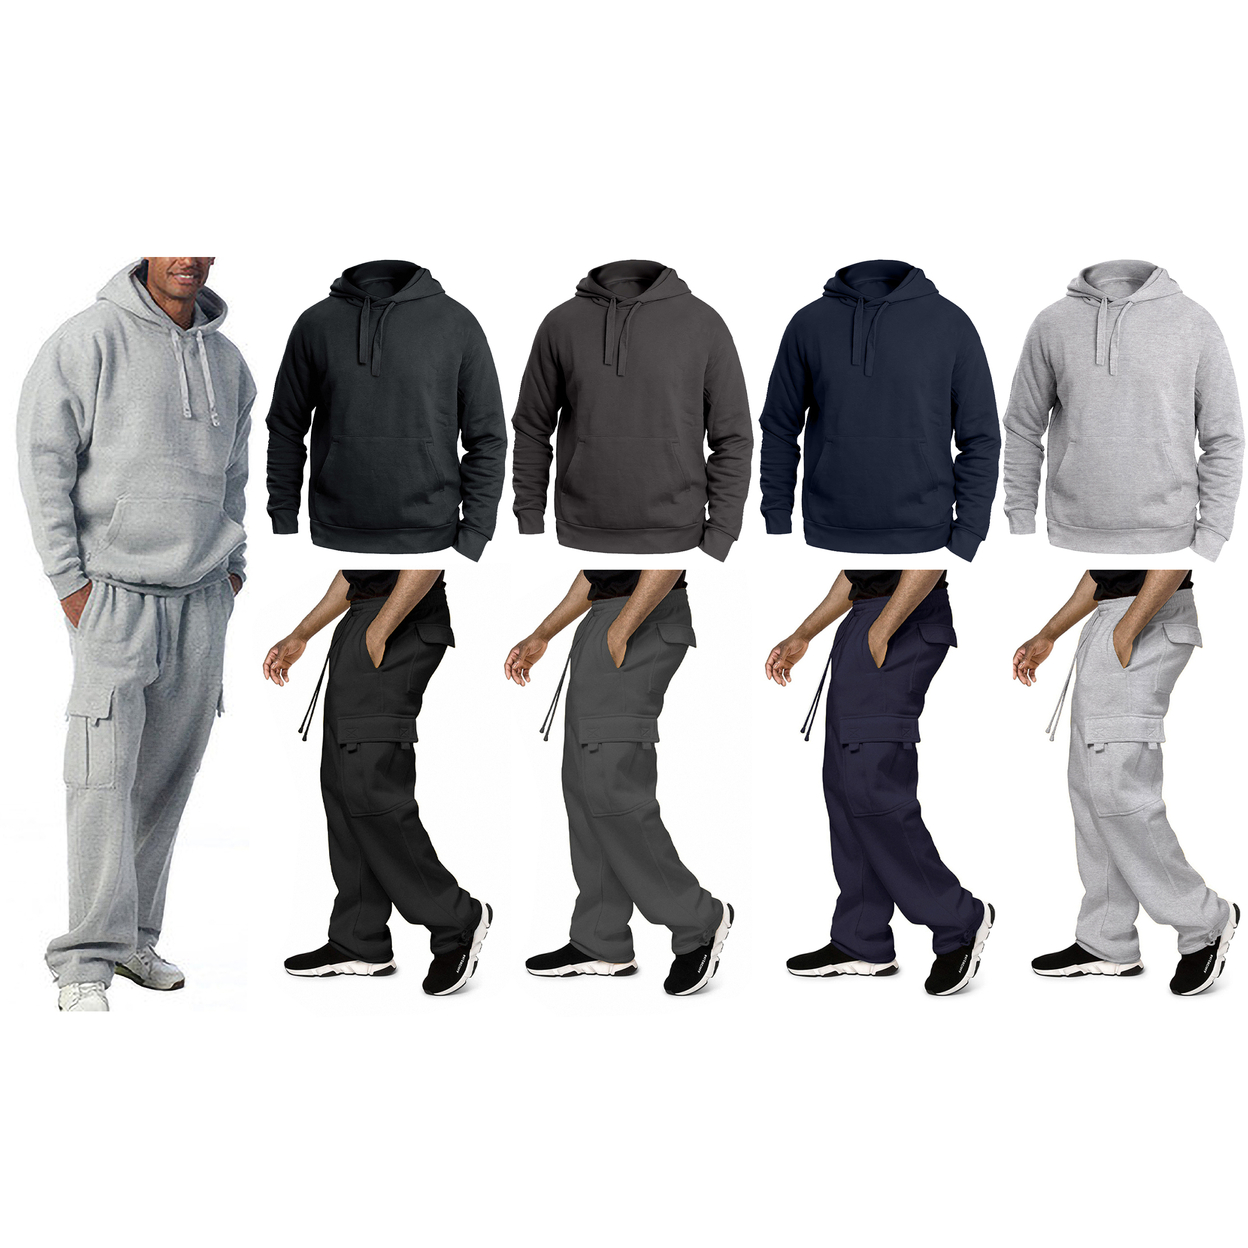 2-Pack: Men's Big & Tall Winter Warm Cozy Athletic Fleece Lined Multi-Pocket Cargo Sweatsuit - Navy, Large